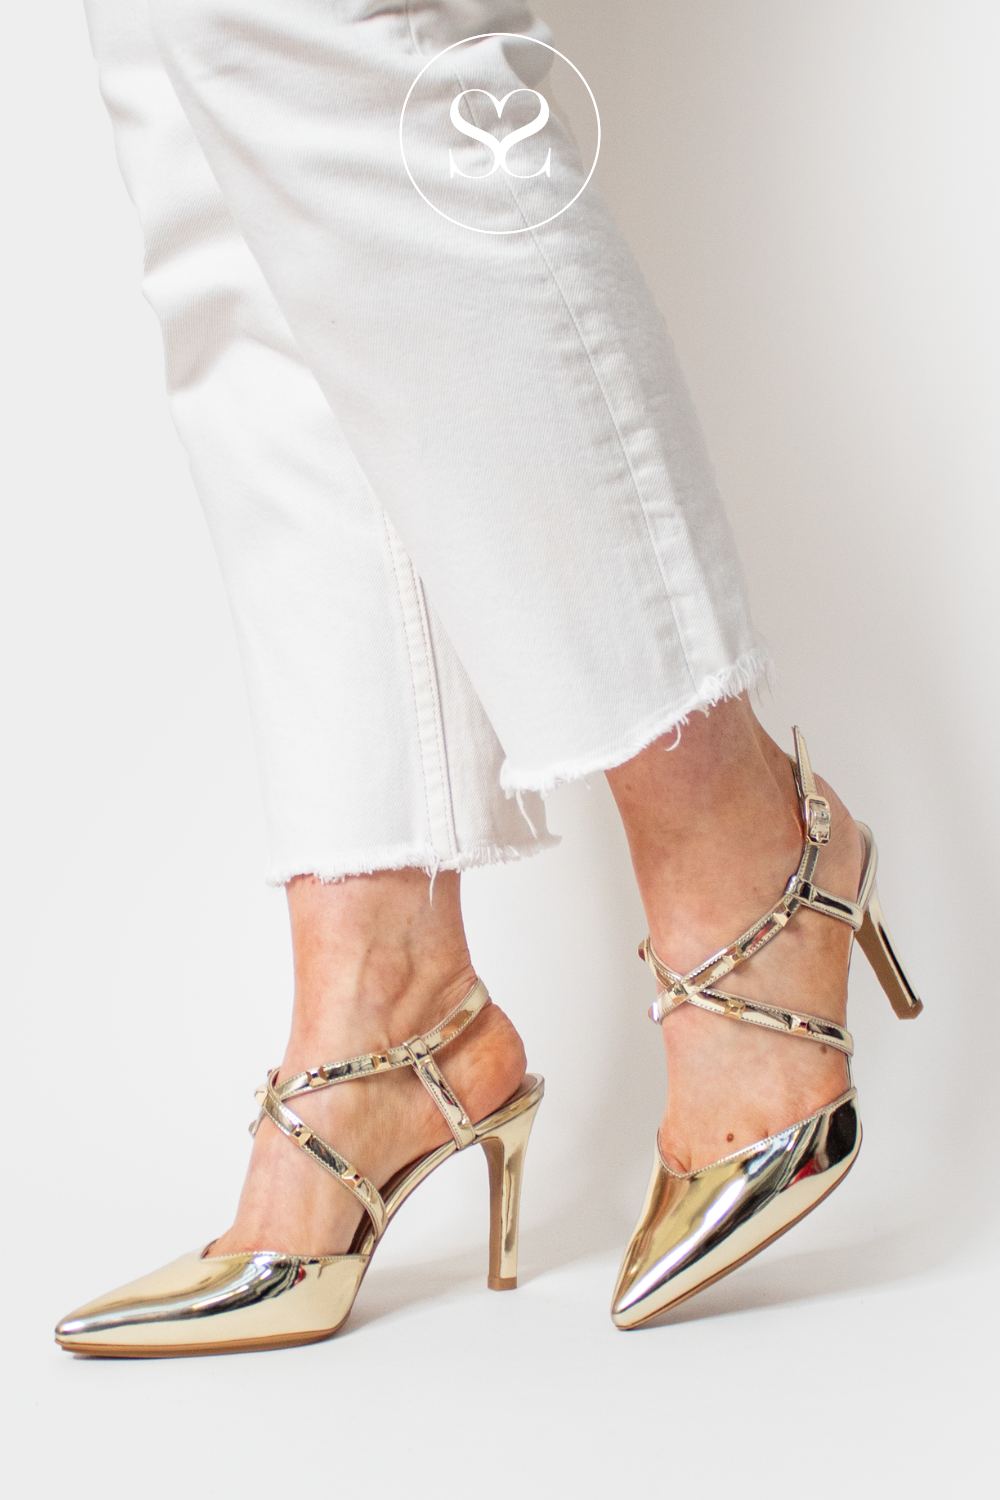 Gold 9.5 Women's US Shoe Size Bridal Shoes for sale | eBay